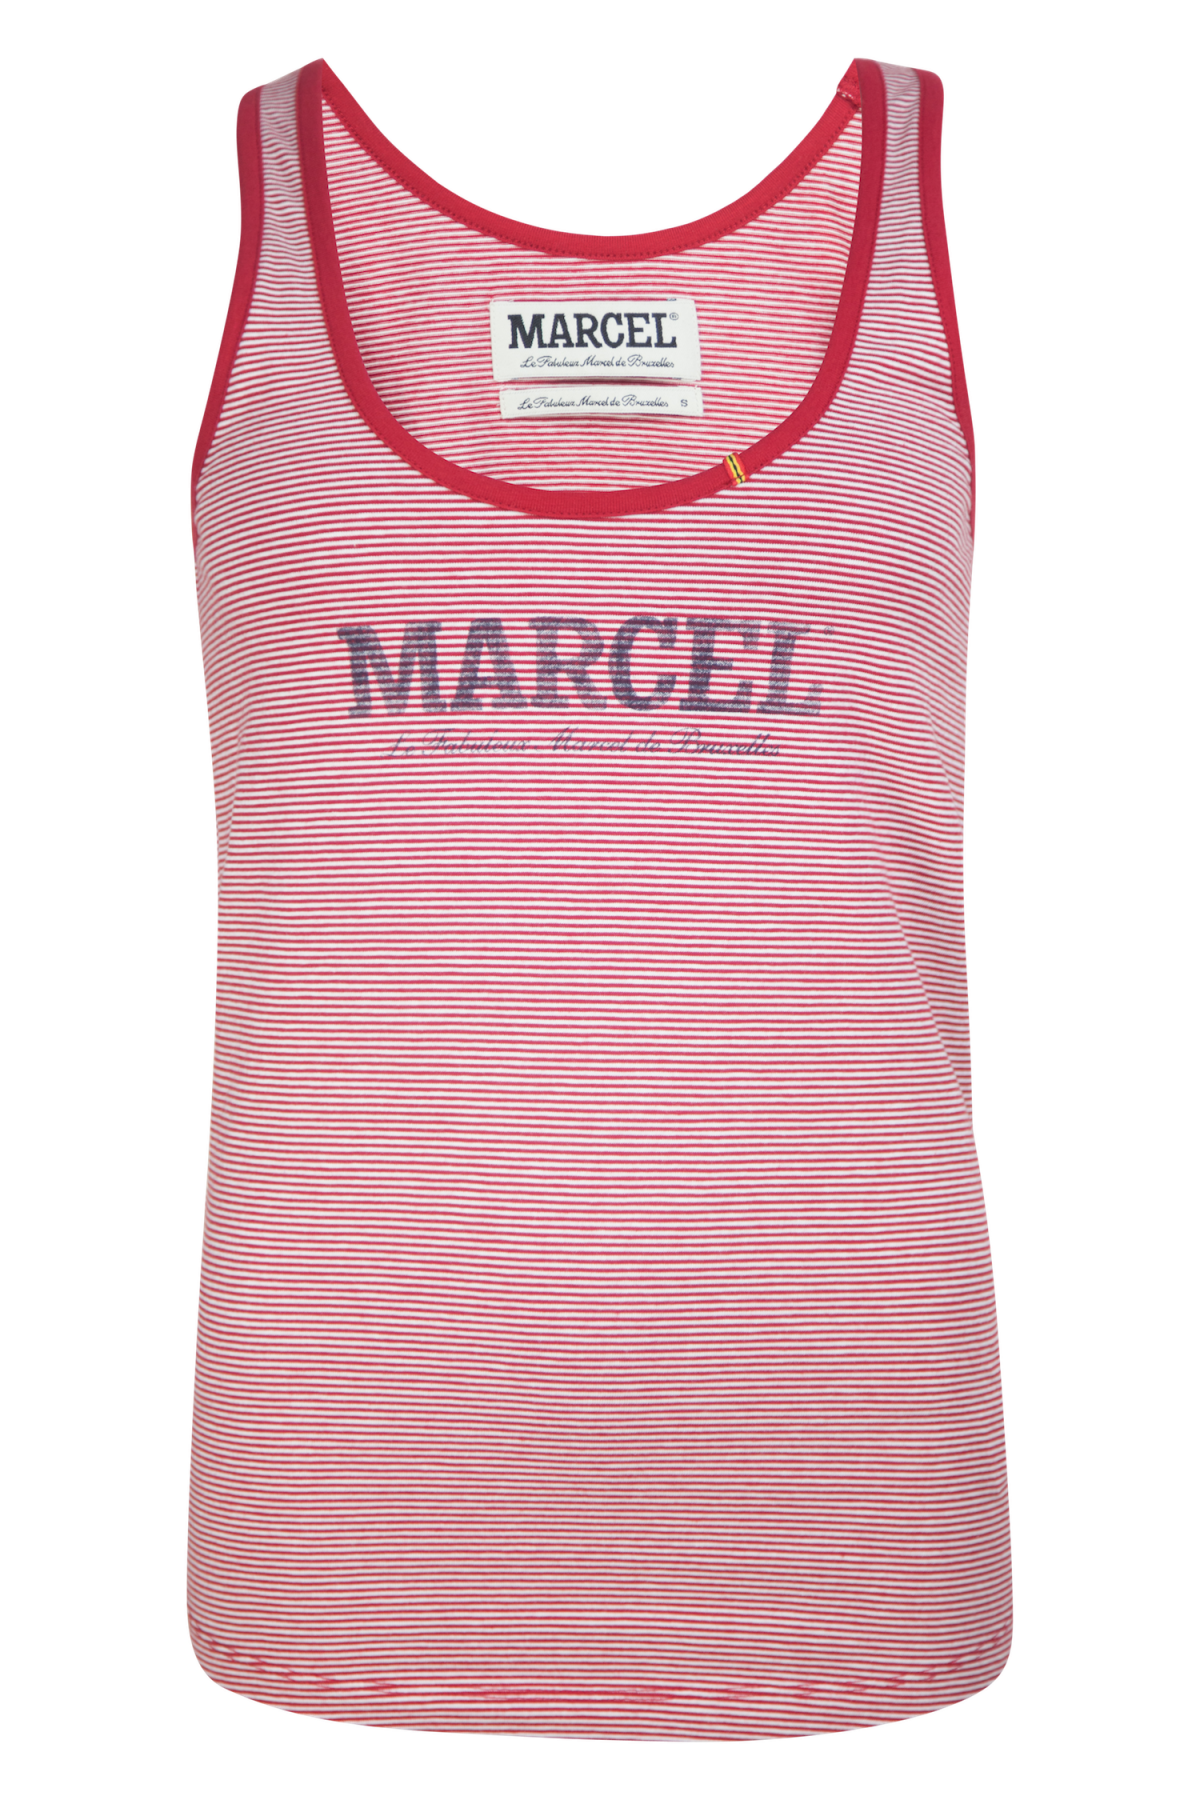 Marcel, €29.99